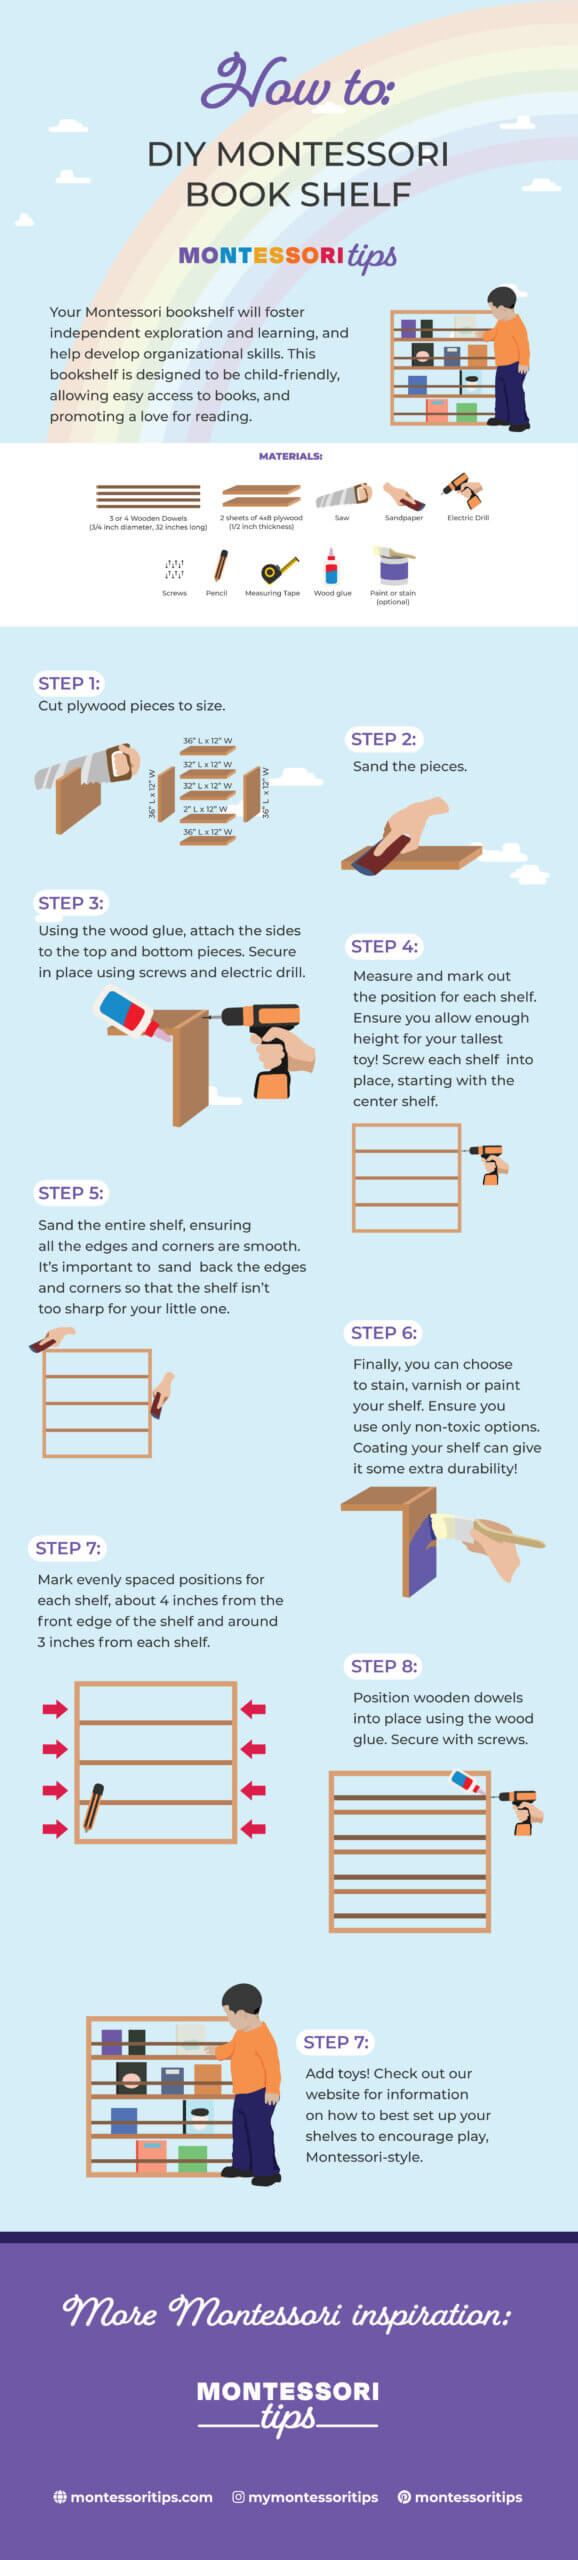 An infographic detailing the steps to create a Montessori book shelf